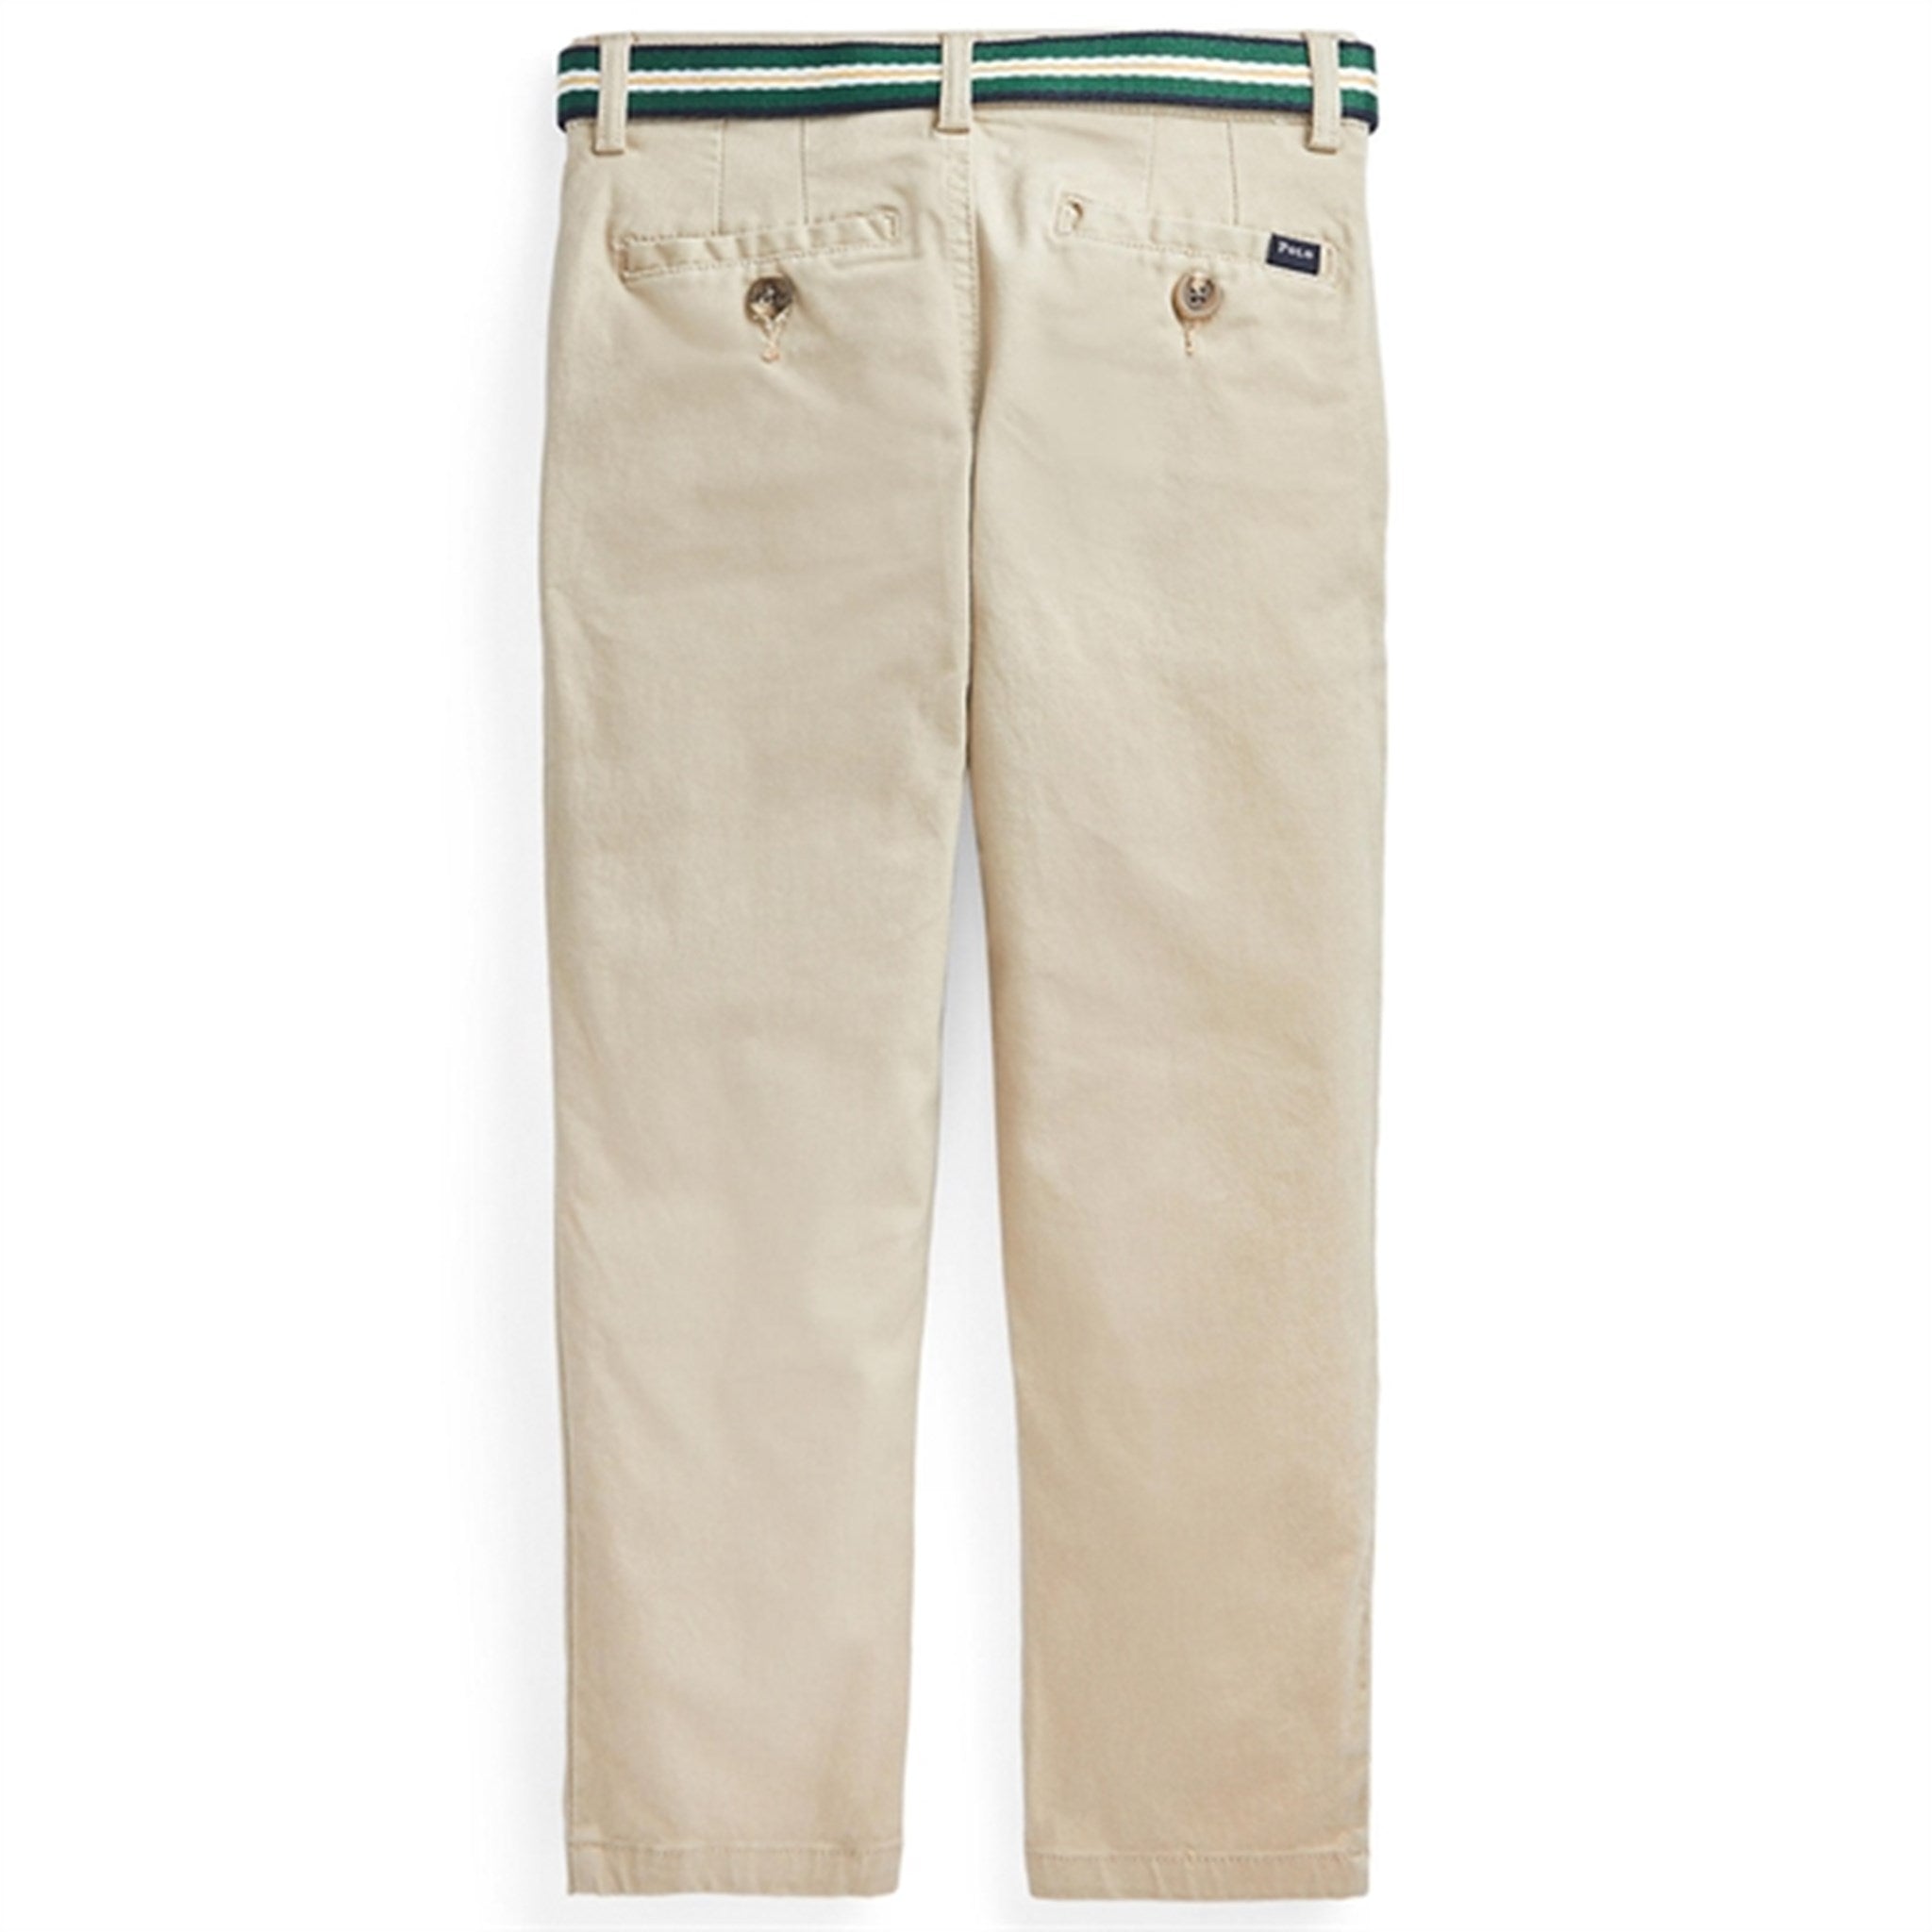 Polo Ralph Lauren Boy Twill Pants Beige/Khaki 2